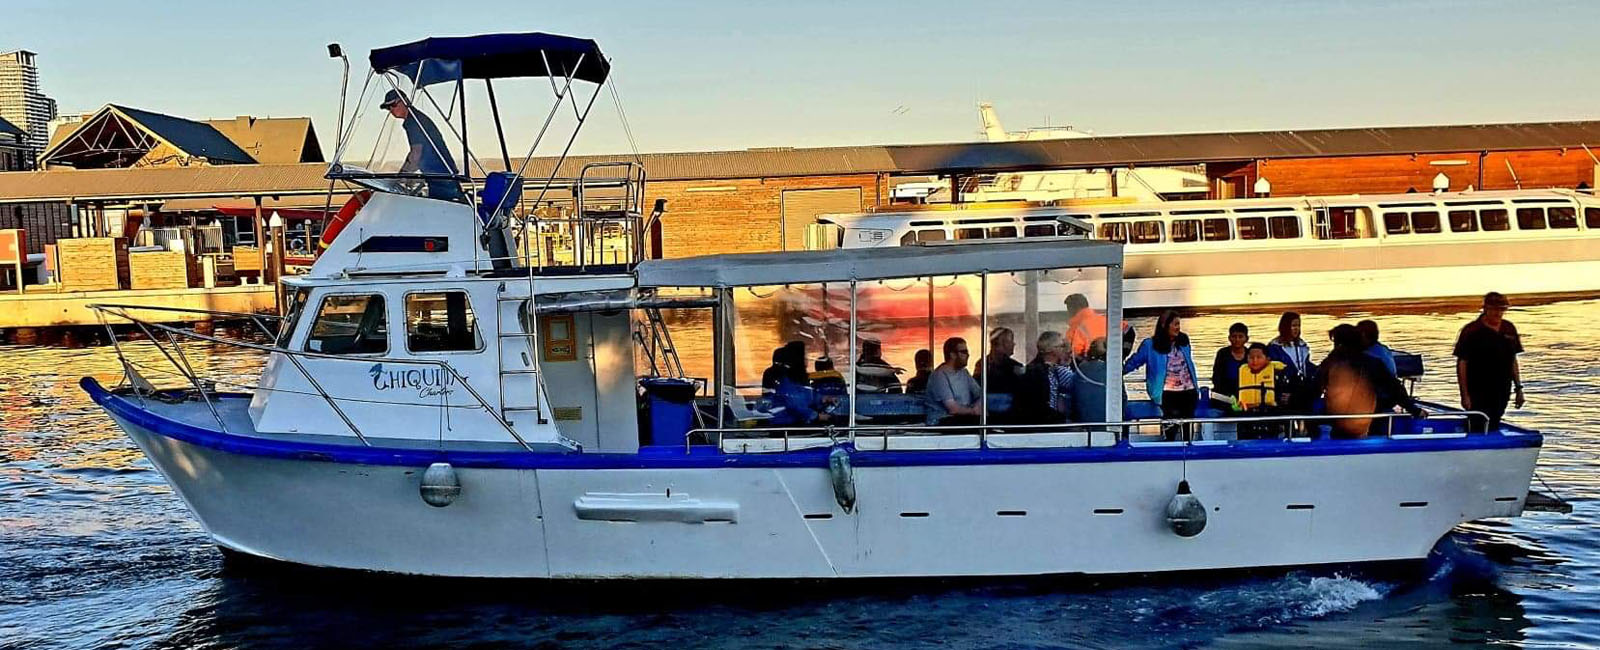 CHIQUITA-boat-charters-side-profile-photo